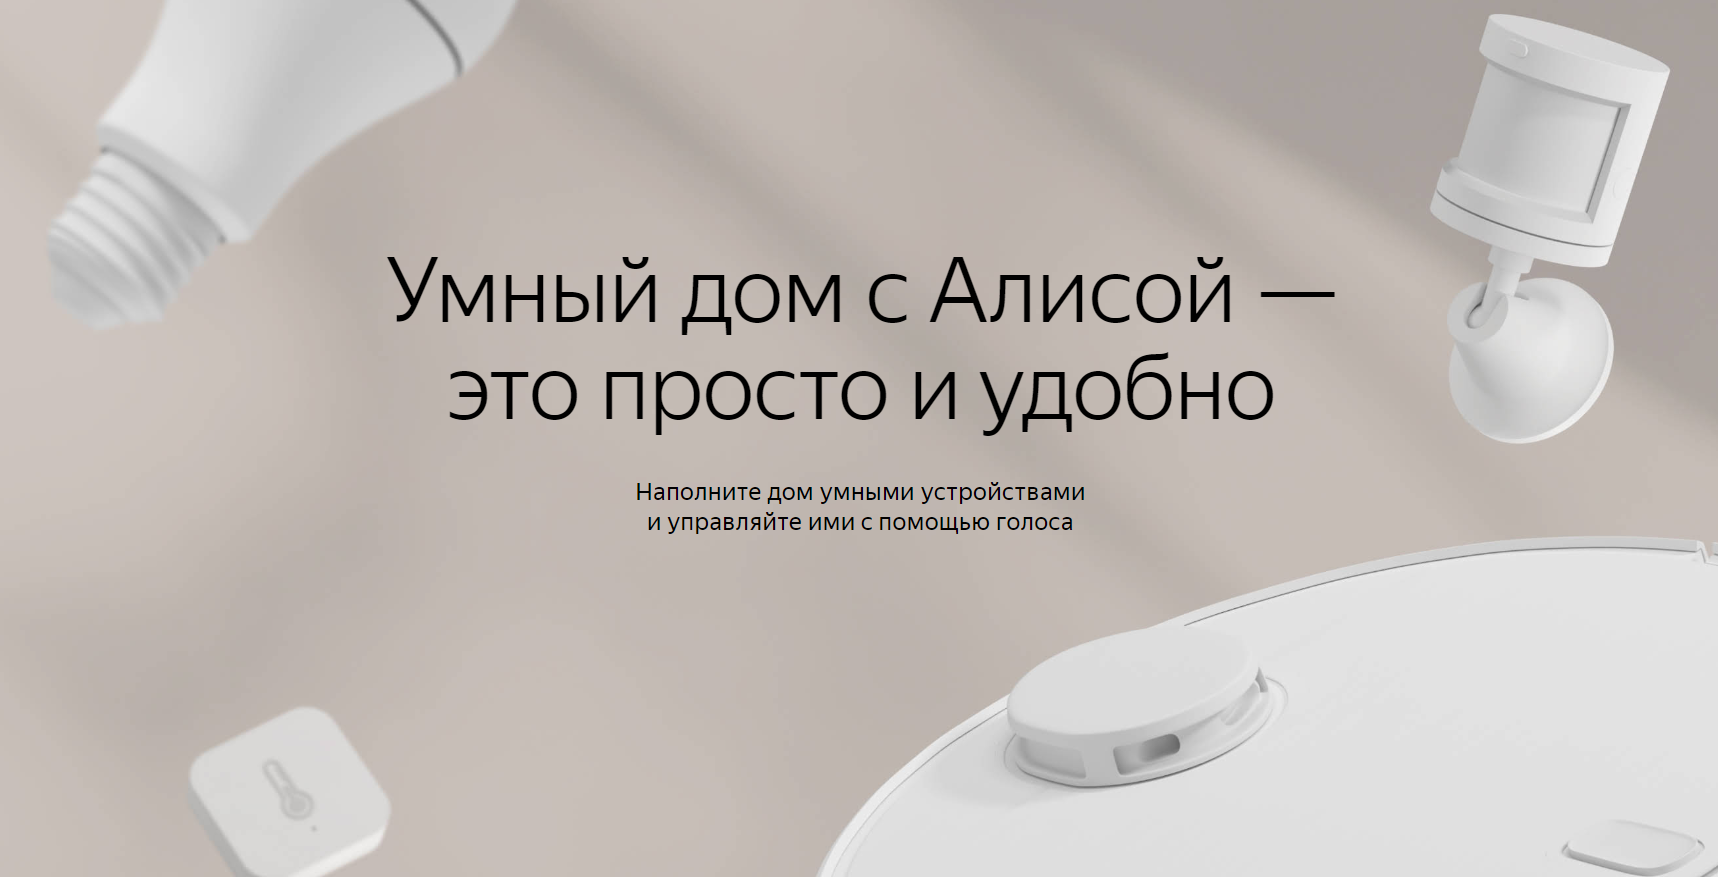 Умная лампочка Яндекса «Яндекс.Лампа 3» YNDX-00019, работает с Алисой, GU10